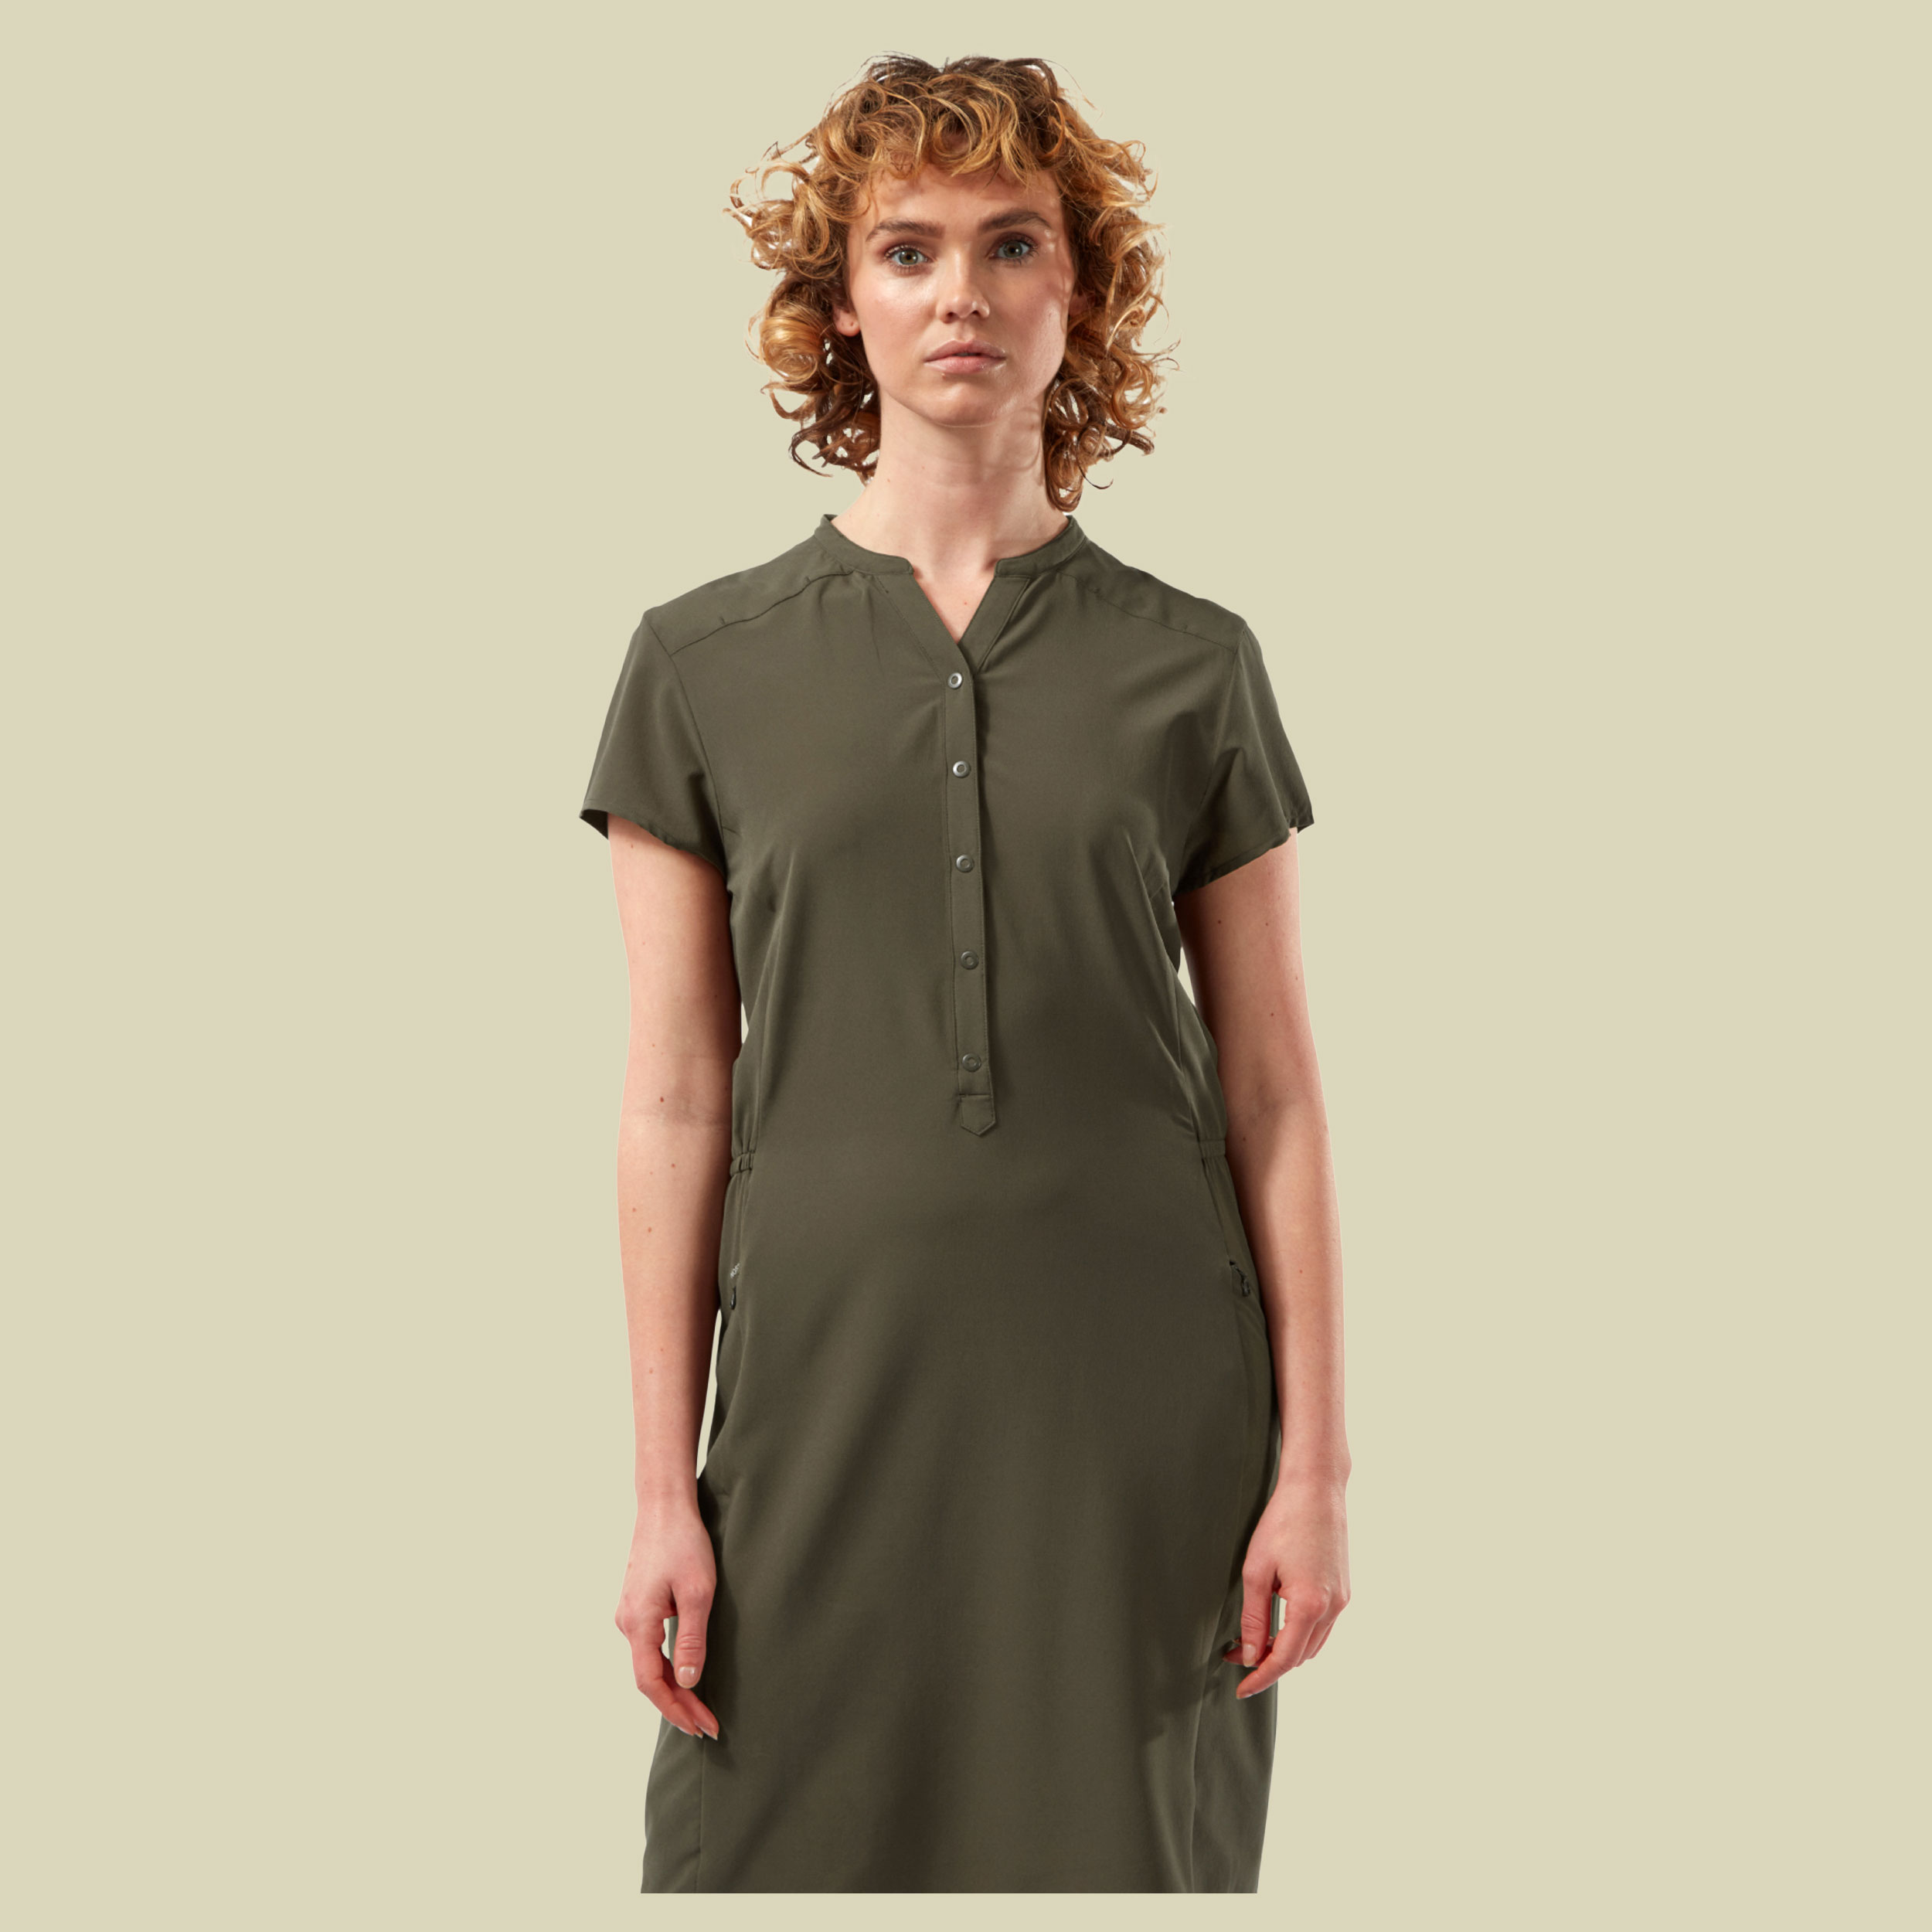 NosiLife Pro Dress Women Größe 40 (14) Farbe woodland green